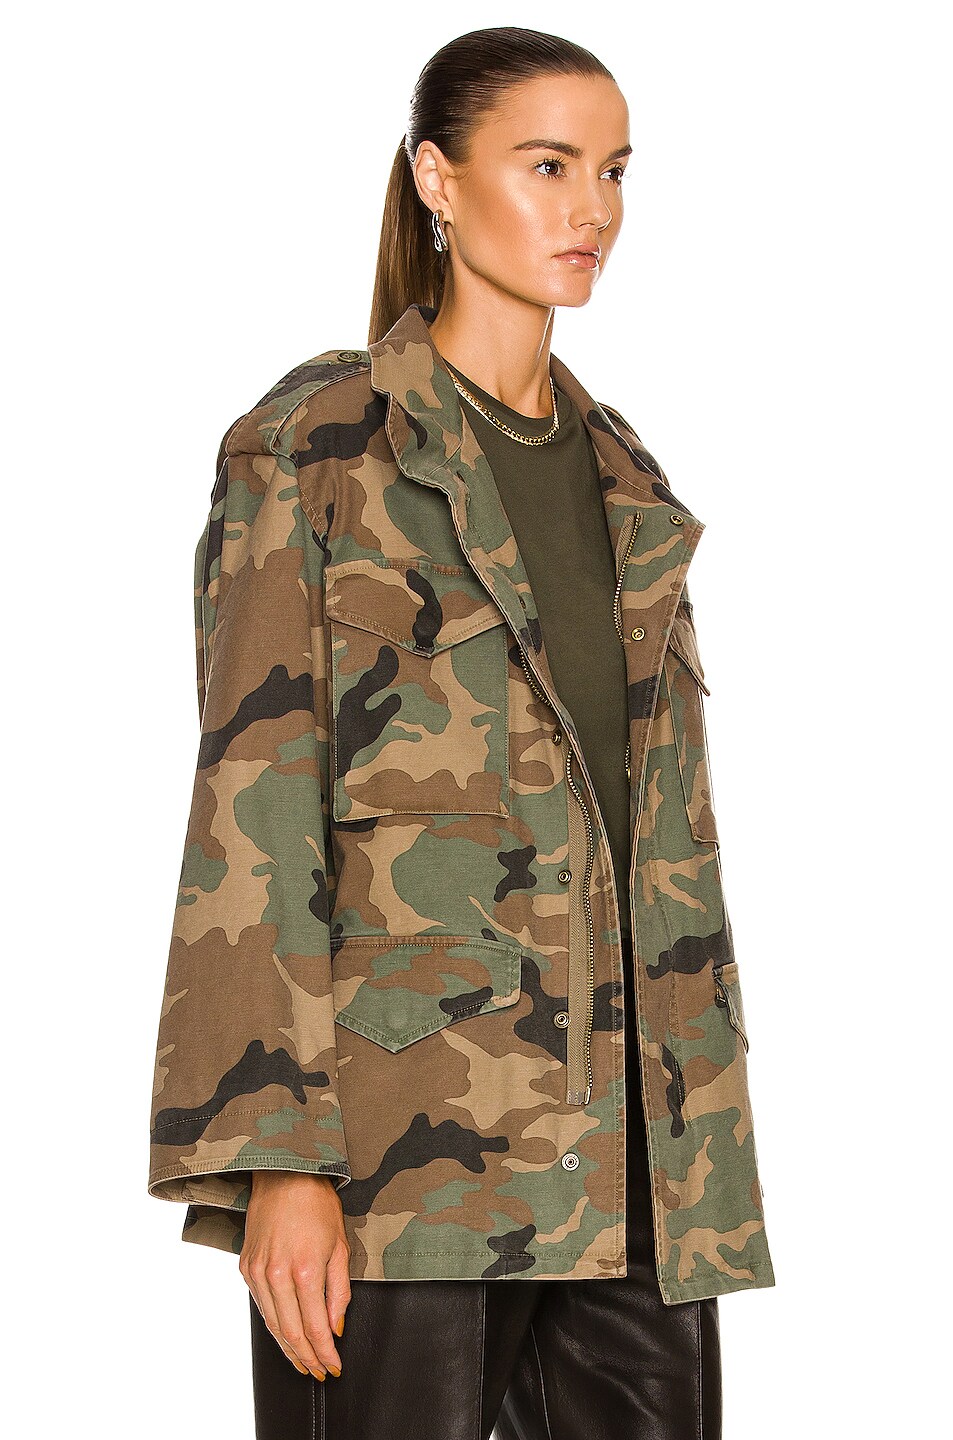 NILI LOTAN Jackie Camo Army Jacket in Dark Green Camouflage Print | FWRD